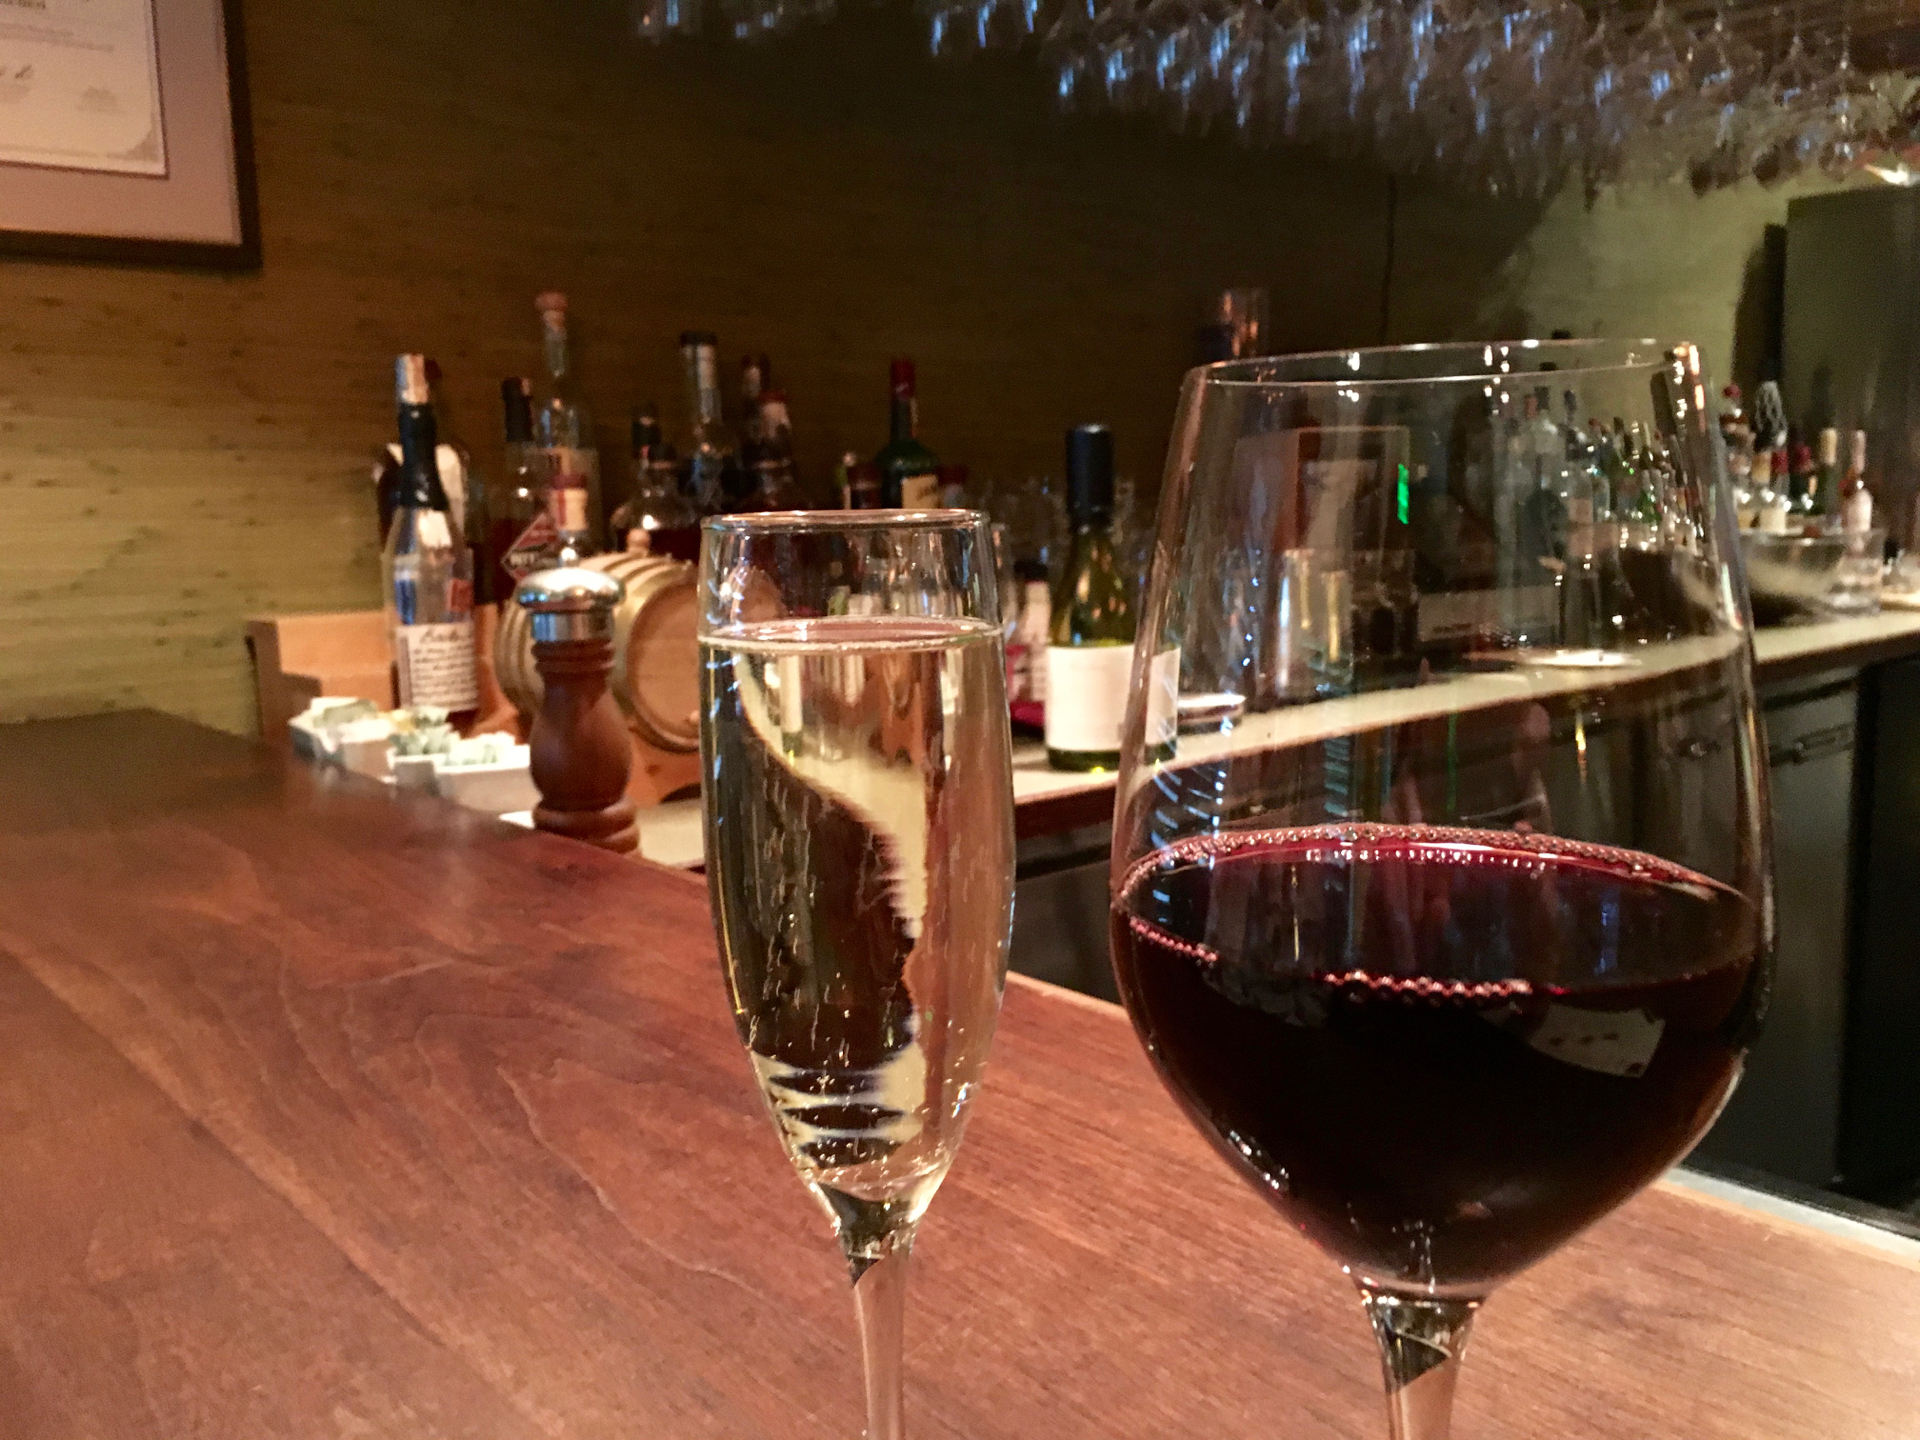 A glass of prosecco and cabernet sauvignon at Cin-Cin Wine Bar & Restaurant.